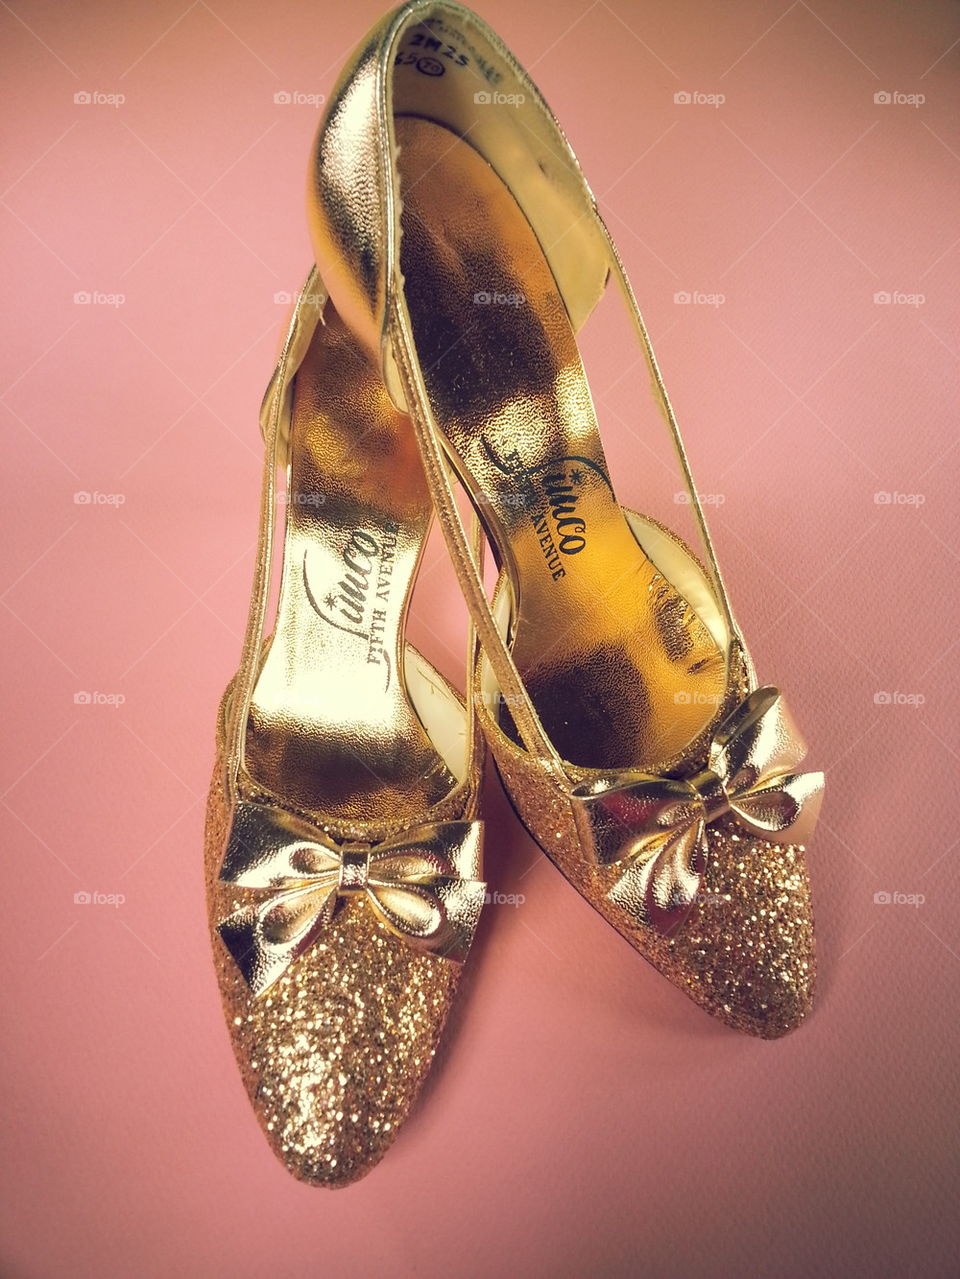 Vintage Gold Heels 1950s